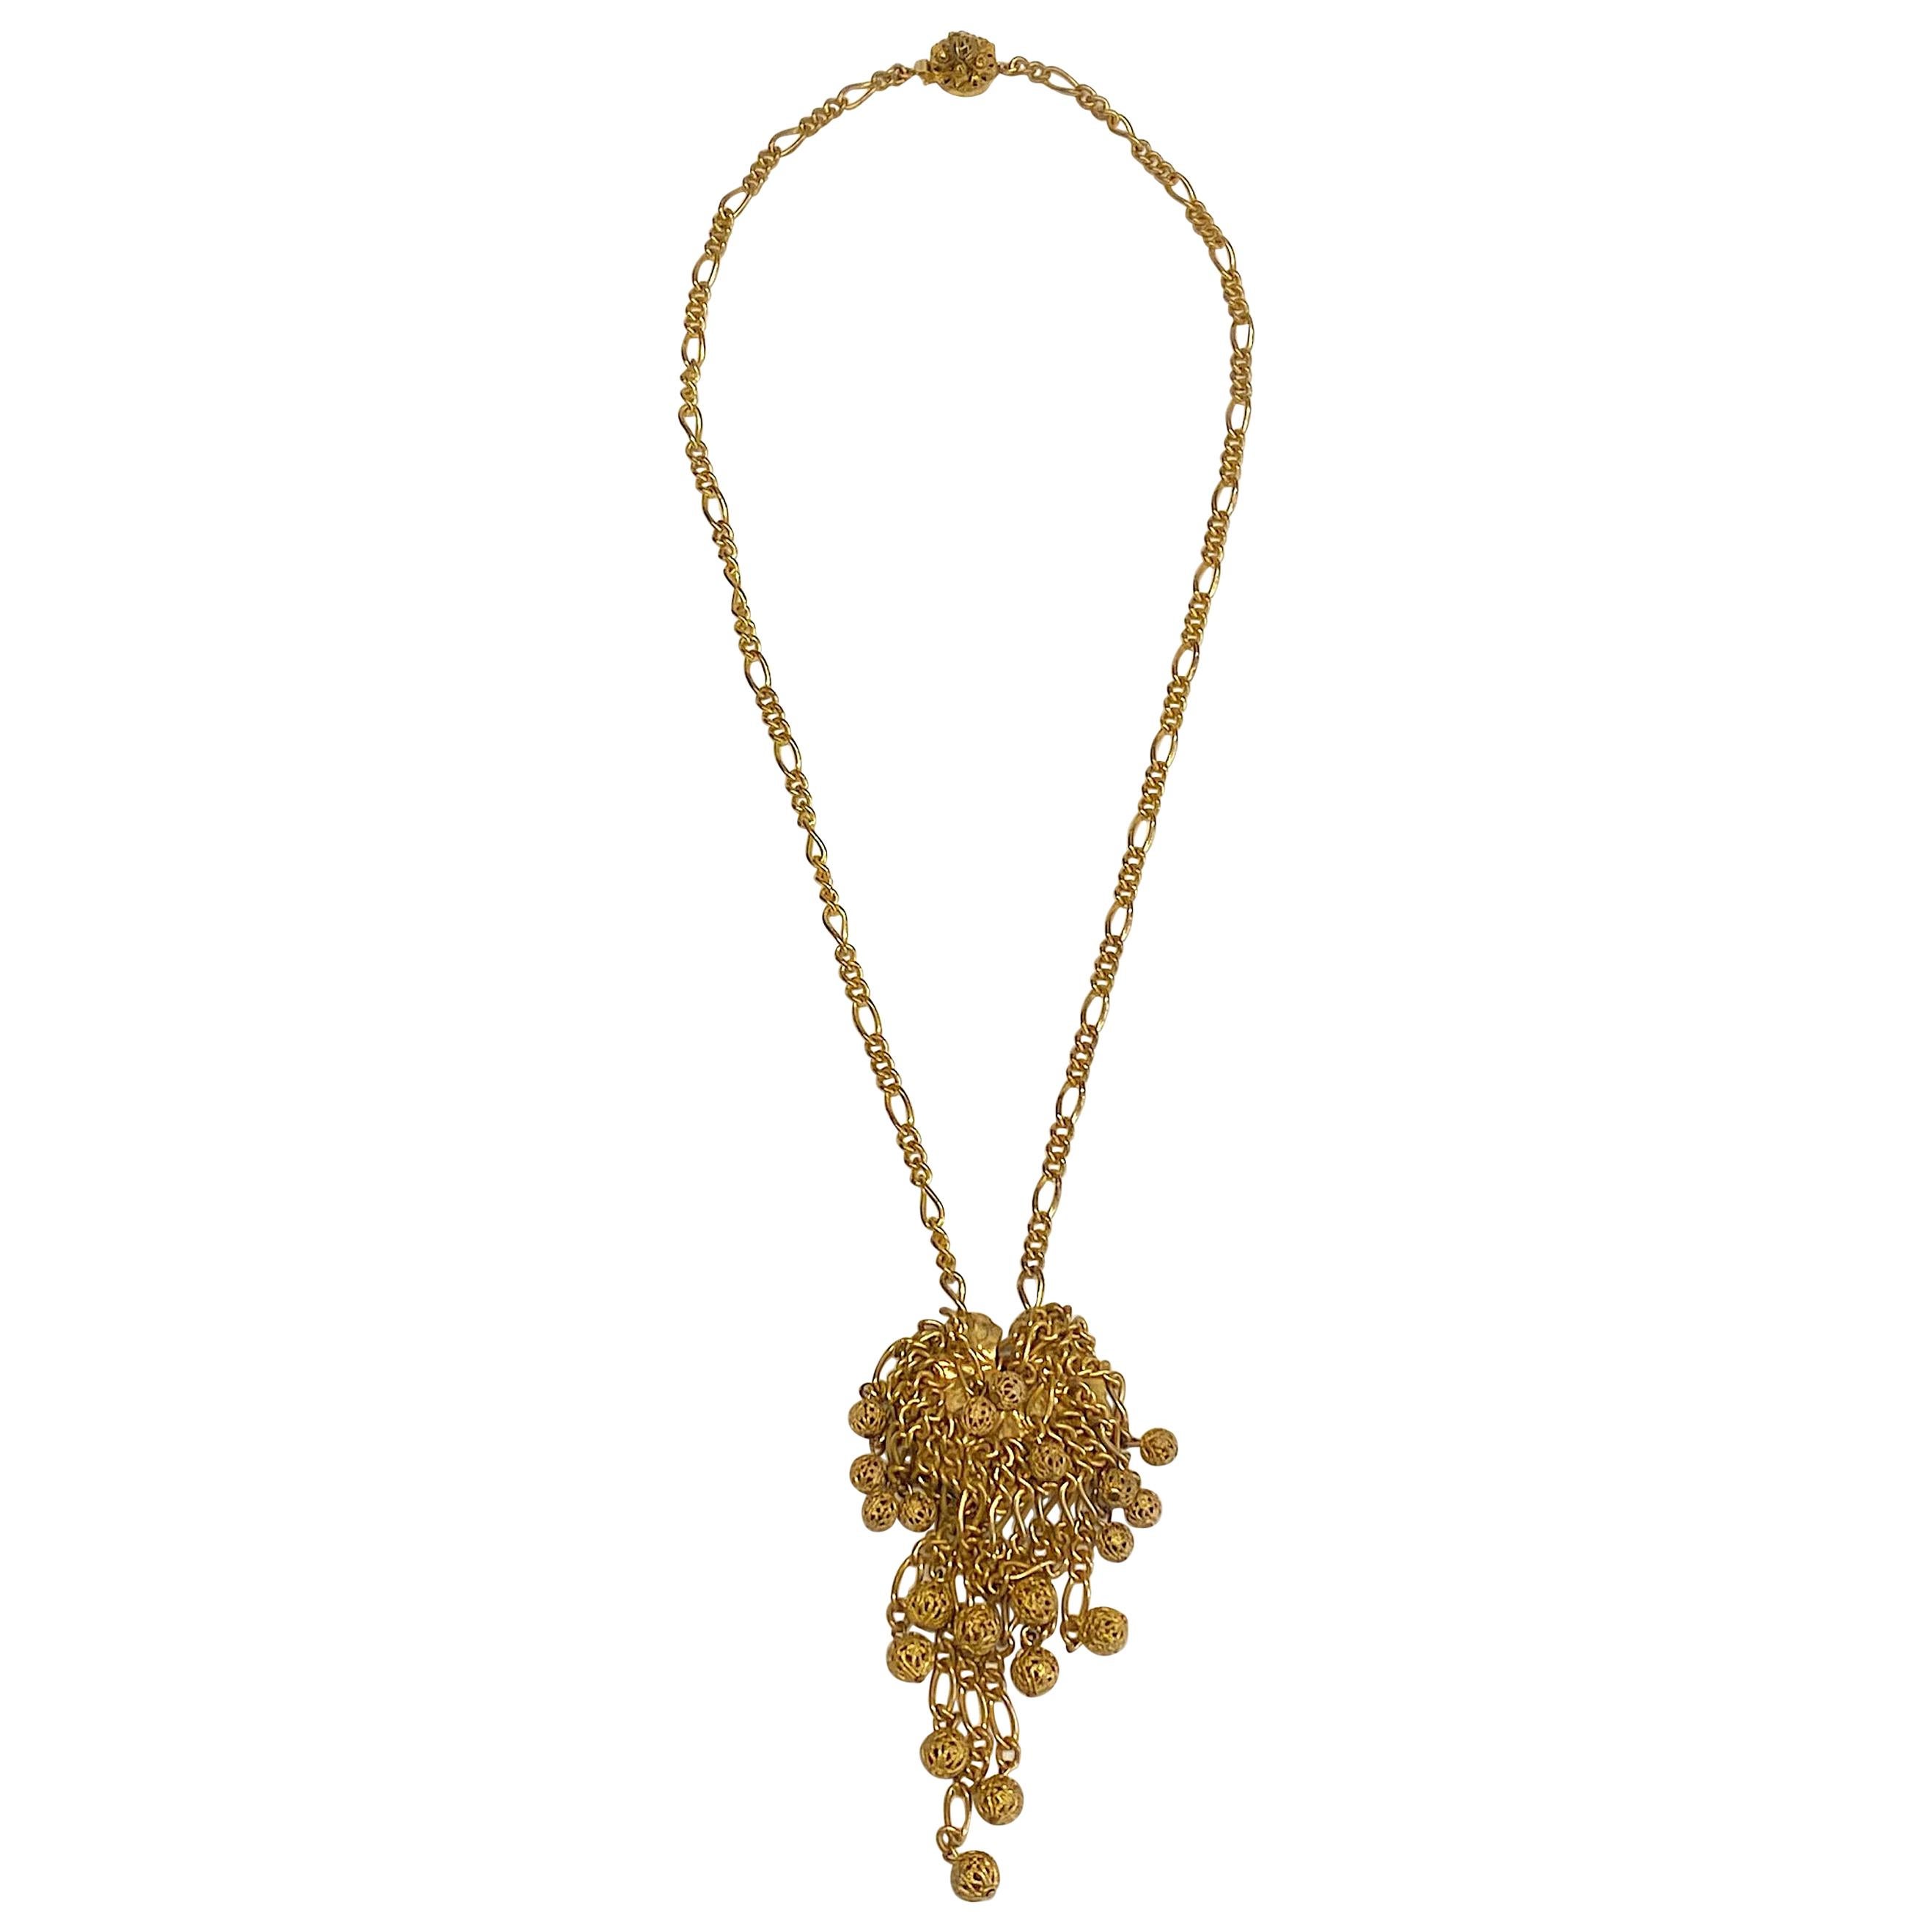 Snow White Cabochon Glass Silver/Bronze/Black/Gold Chain Pendant Necklace #7812 